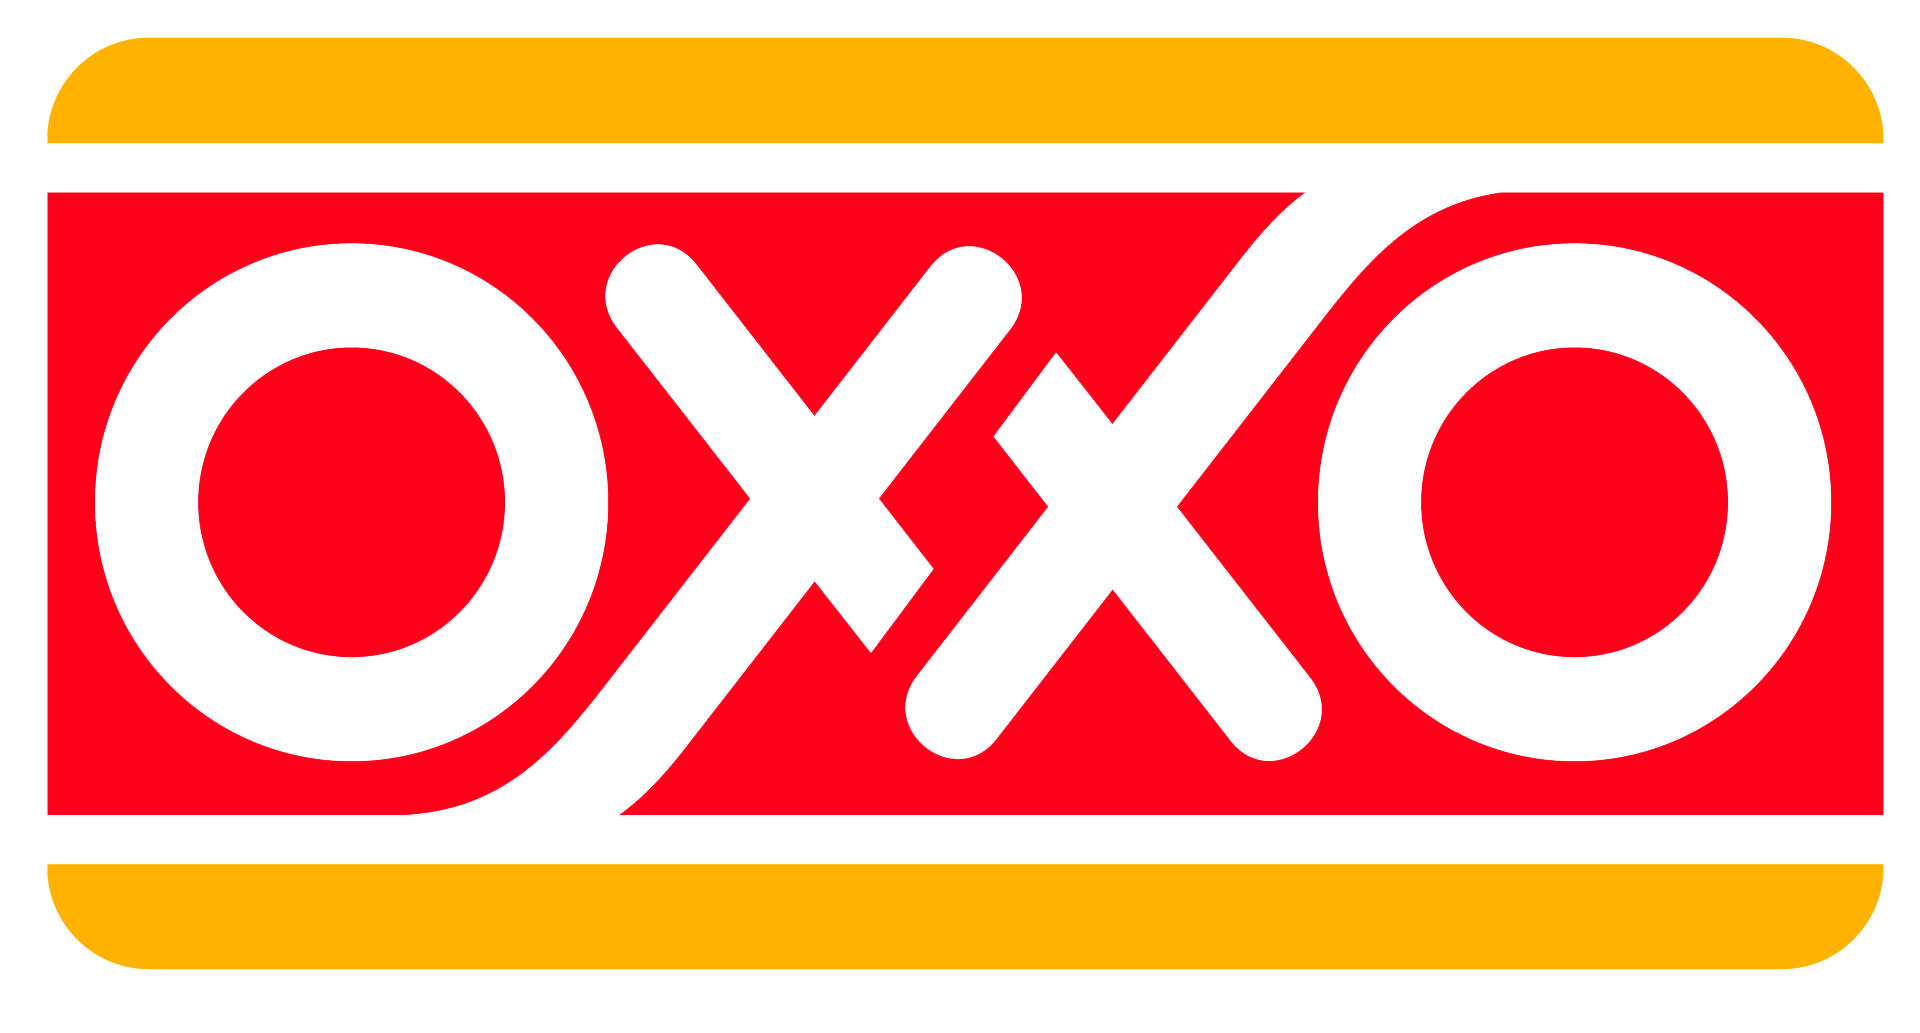 Oxxo-mty